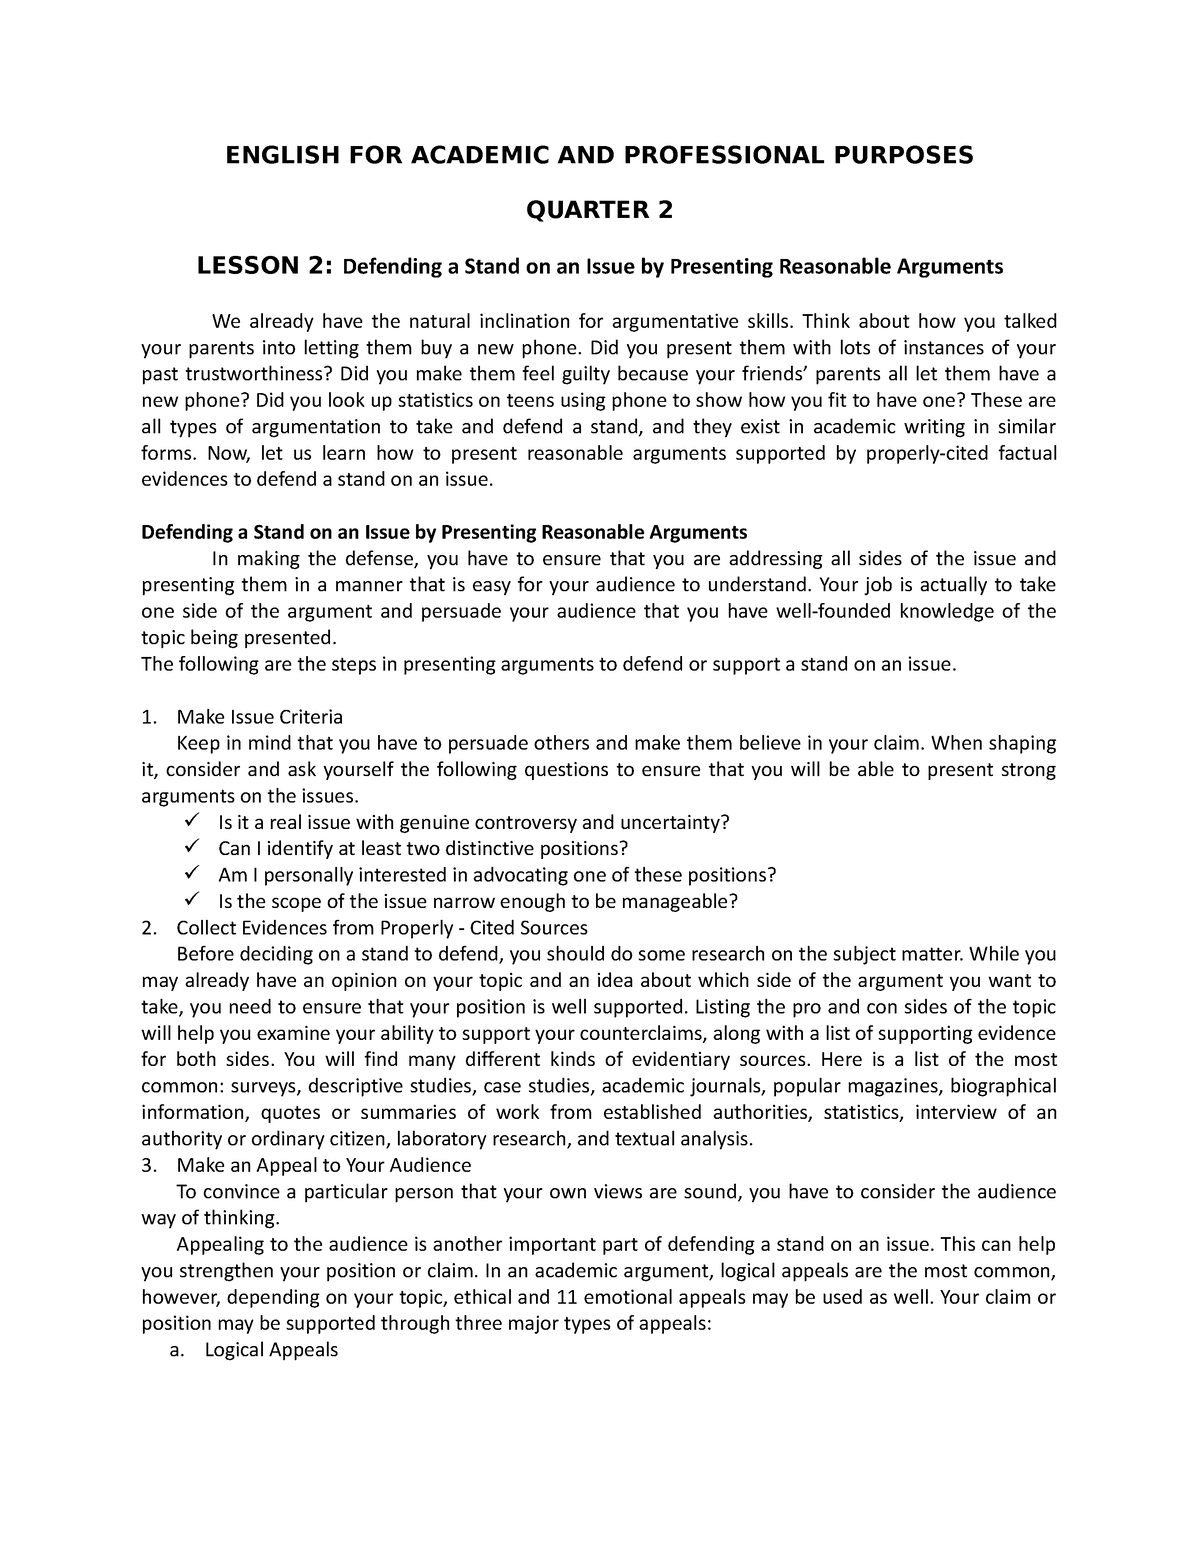 Eapp Quarter 2 Lesson 2 English For Academic And Professional Purposes Quarter 2 Lesson 2 5602